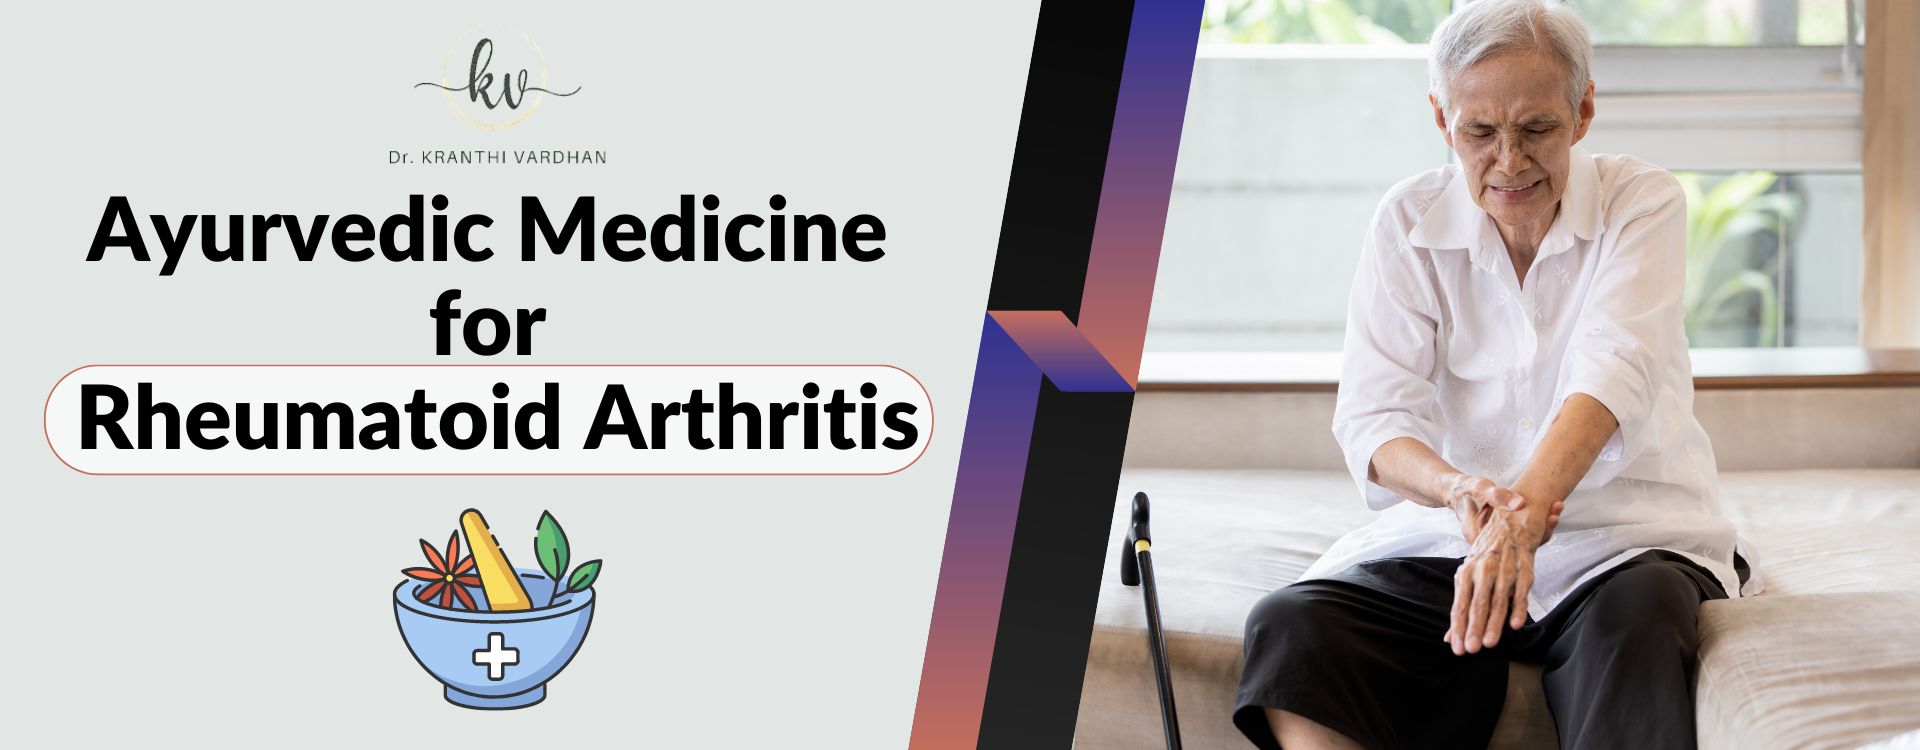 Ayurvedic Medicine for Rheumatoid Arthritis